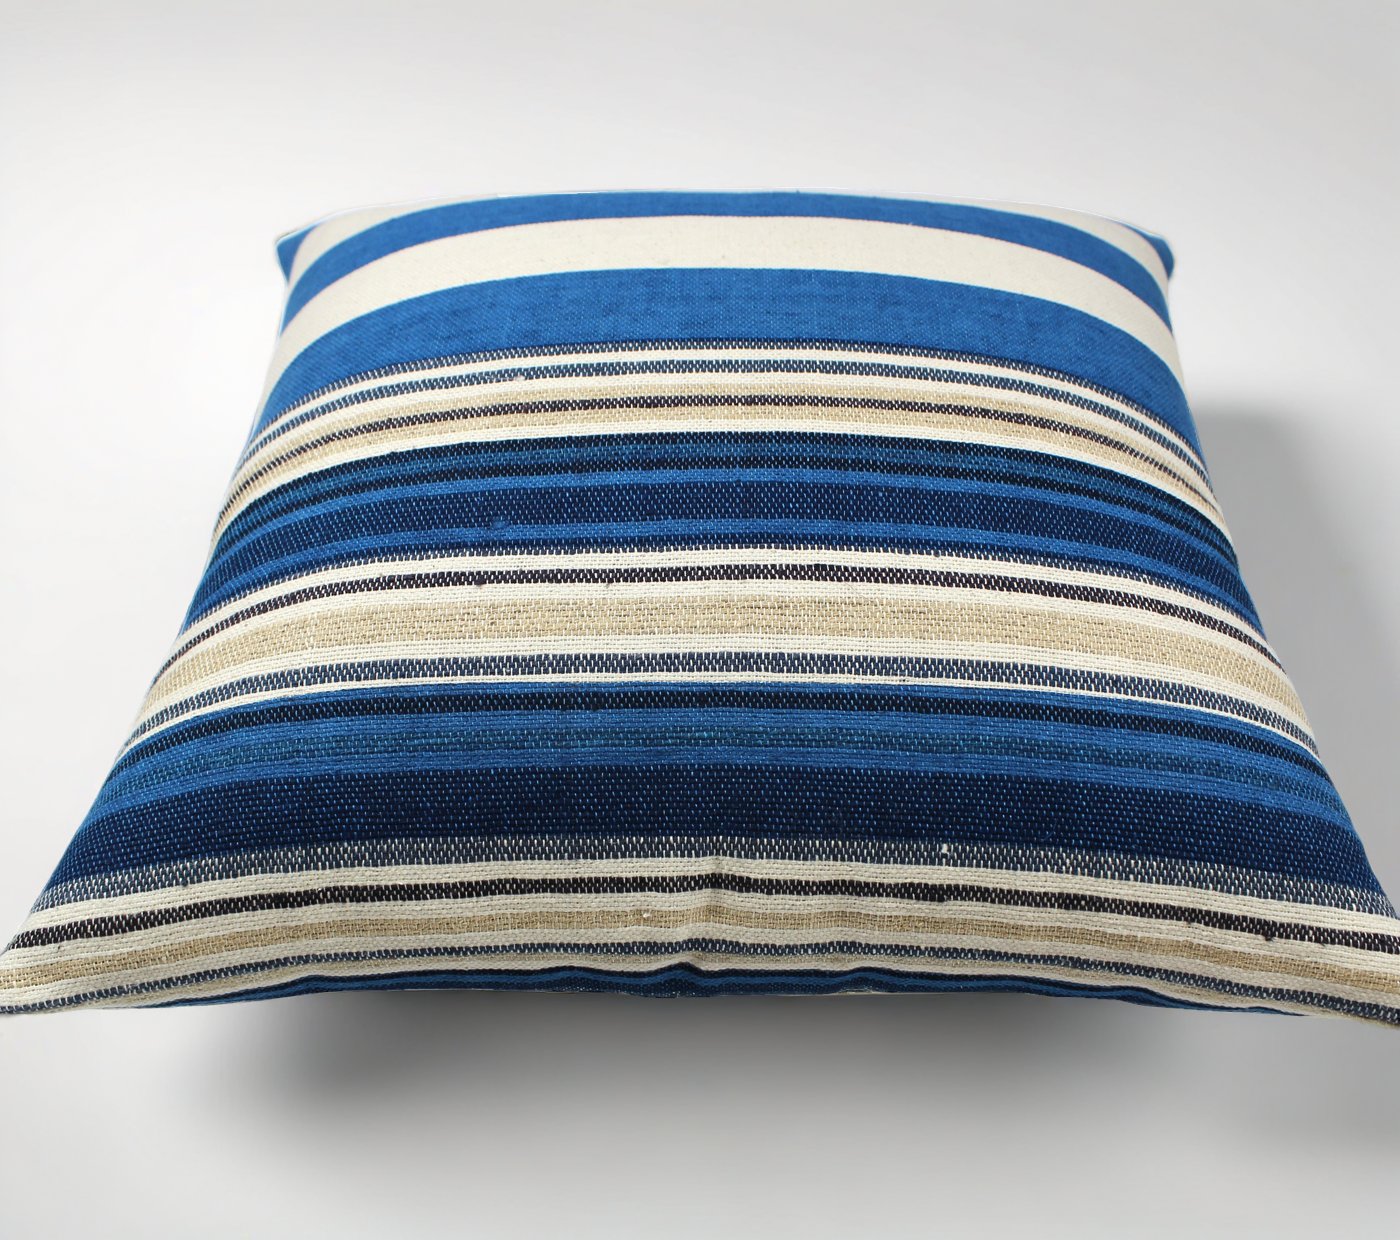 Handloom Woven Blue Striped Cushion Cover Size 45X45Cms